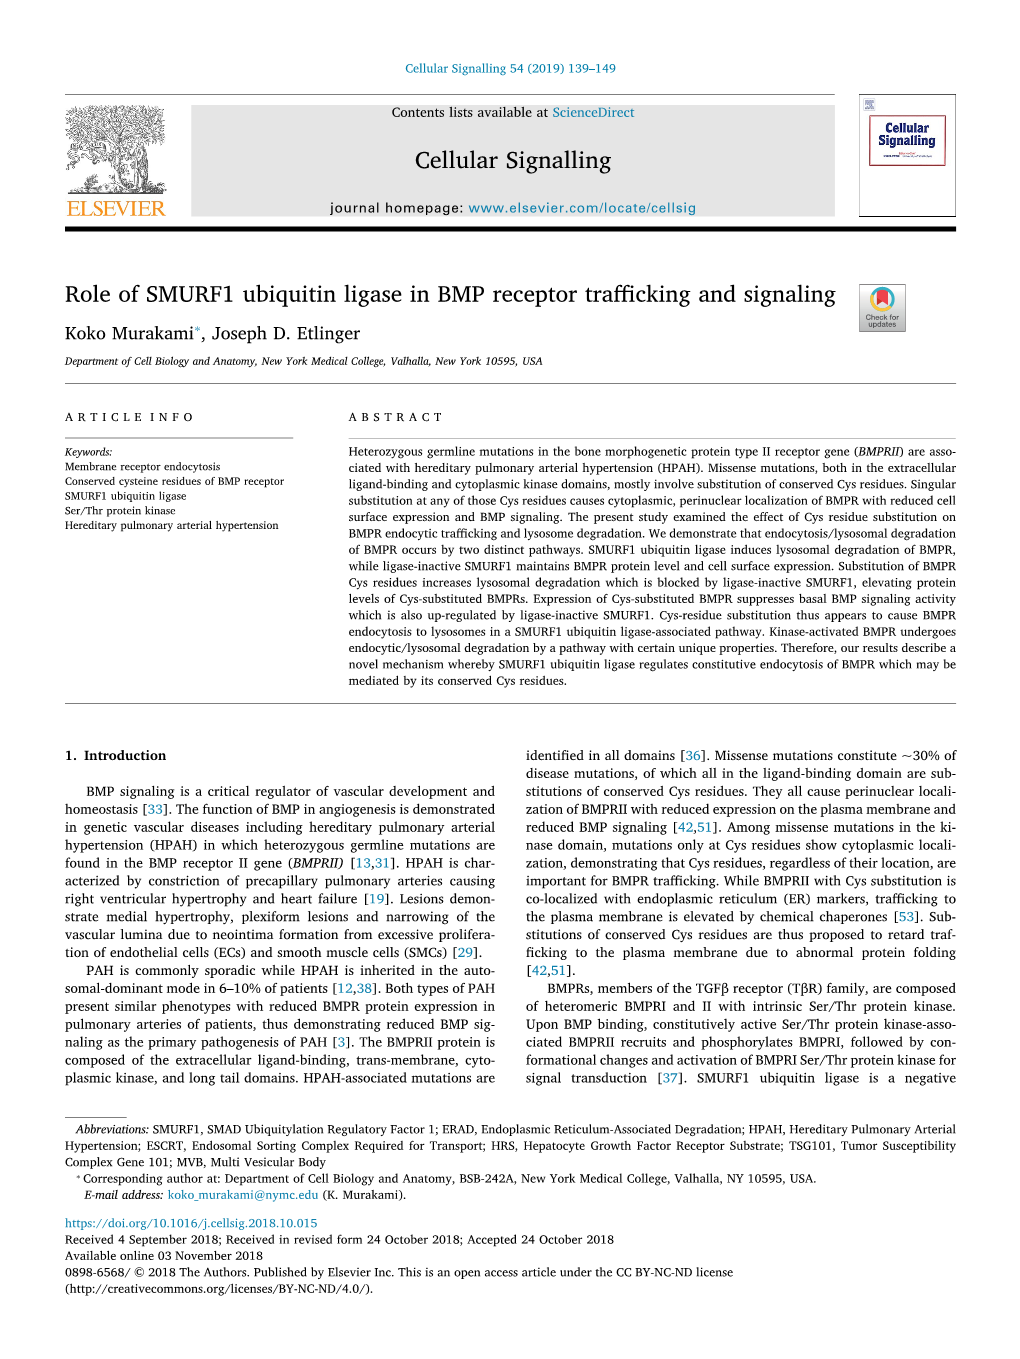 Role of SMURF1 Ubiquitin Ligase in BMP Receptor Trafficking and Signaling T ⁎ Koko Murakami , Joseph D